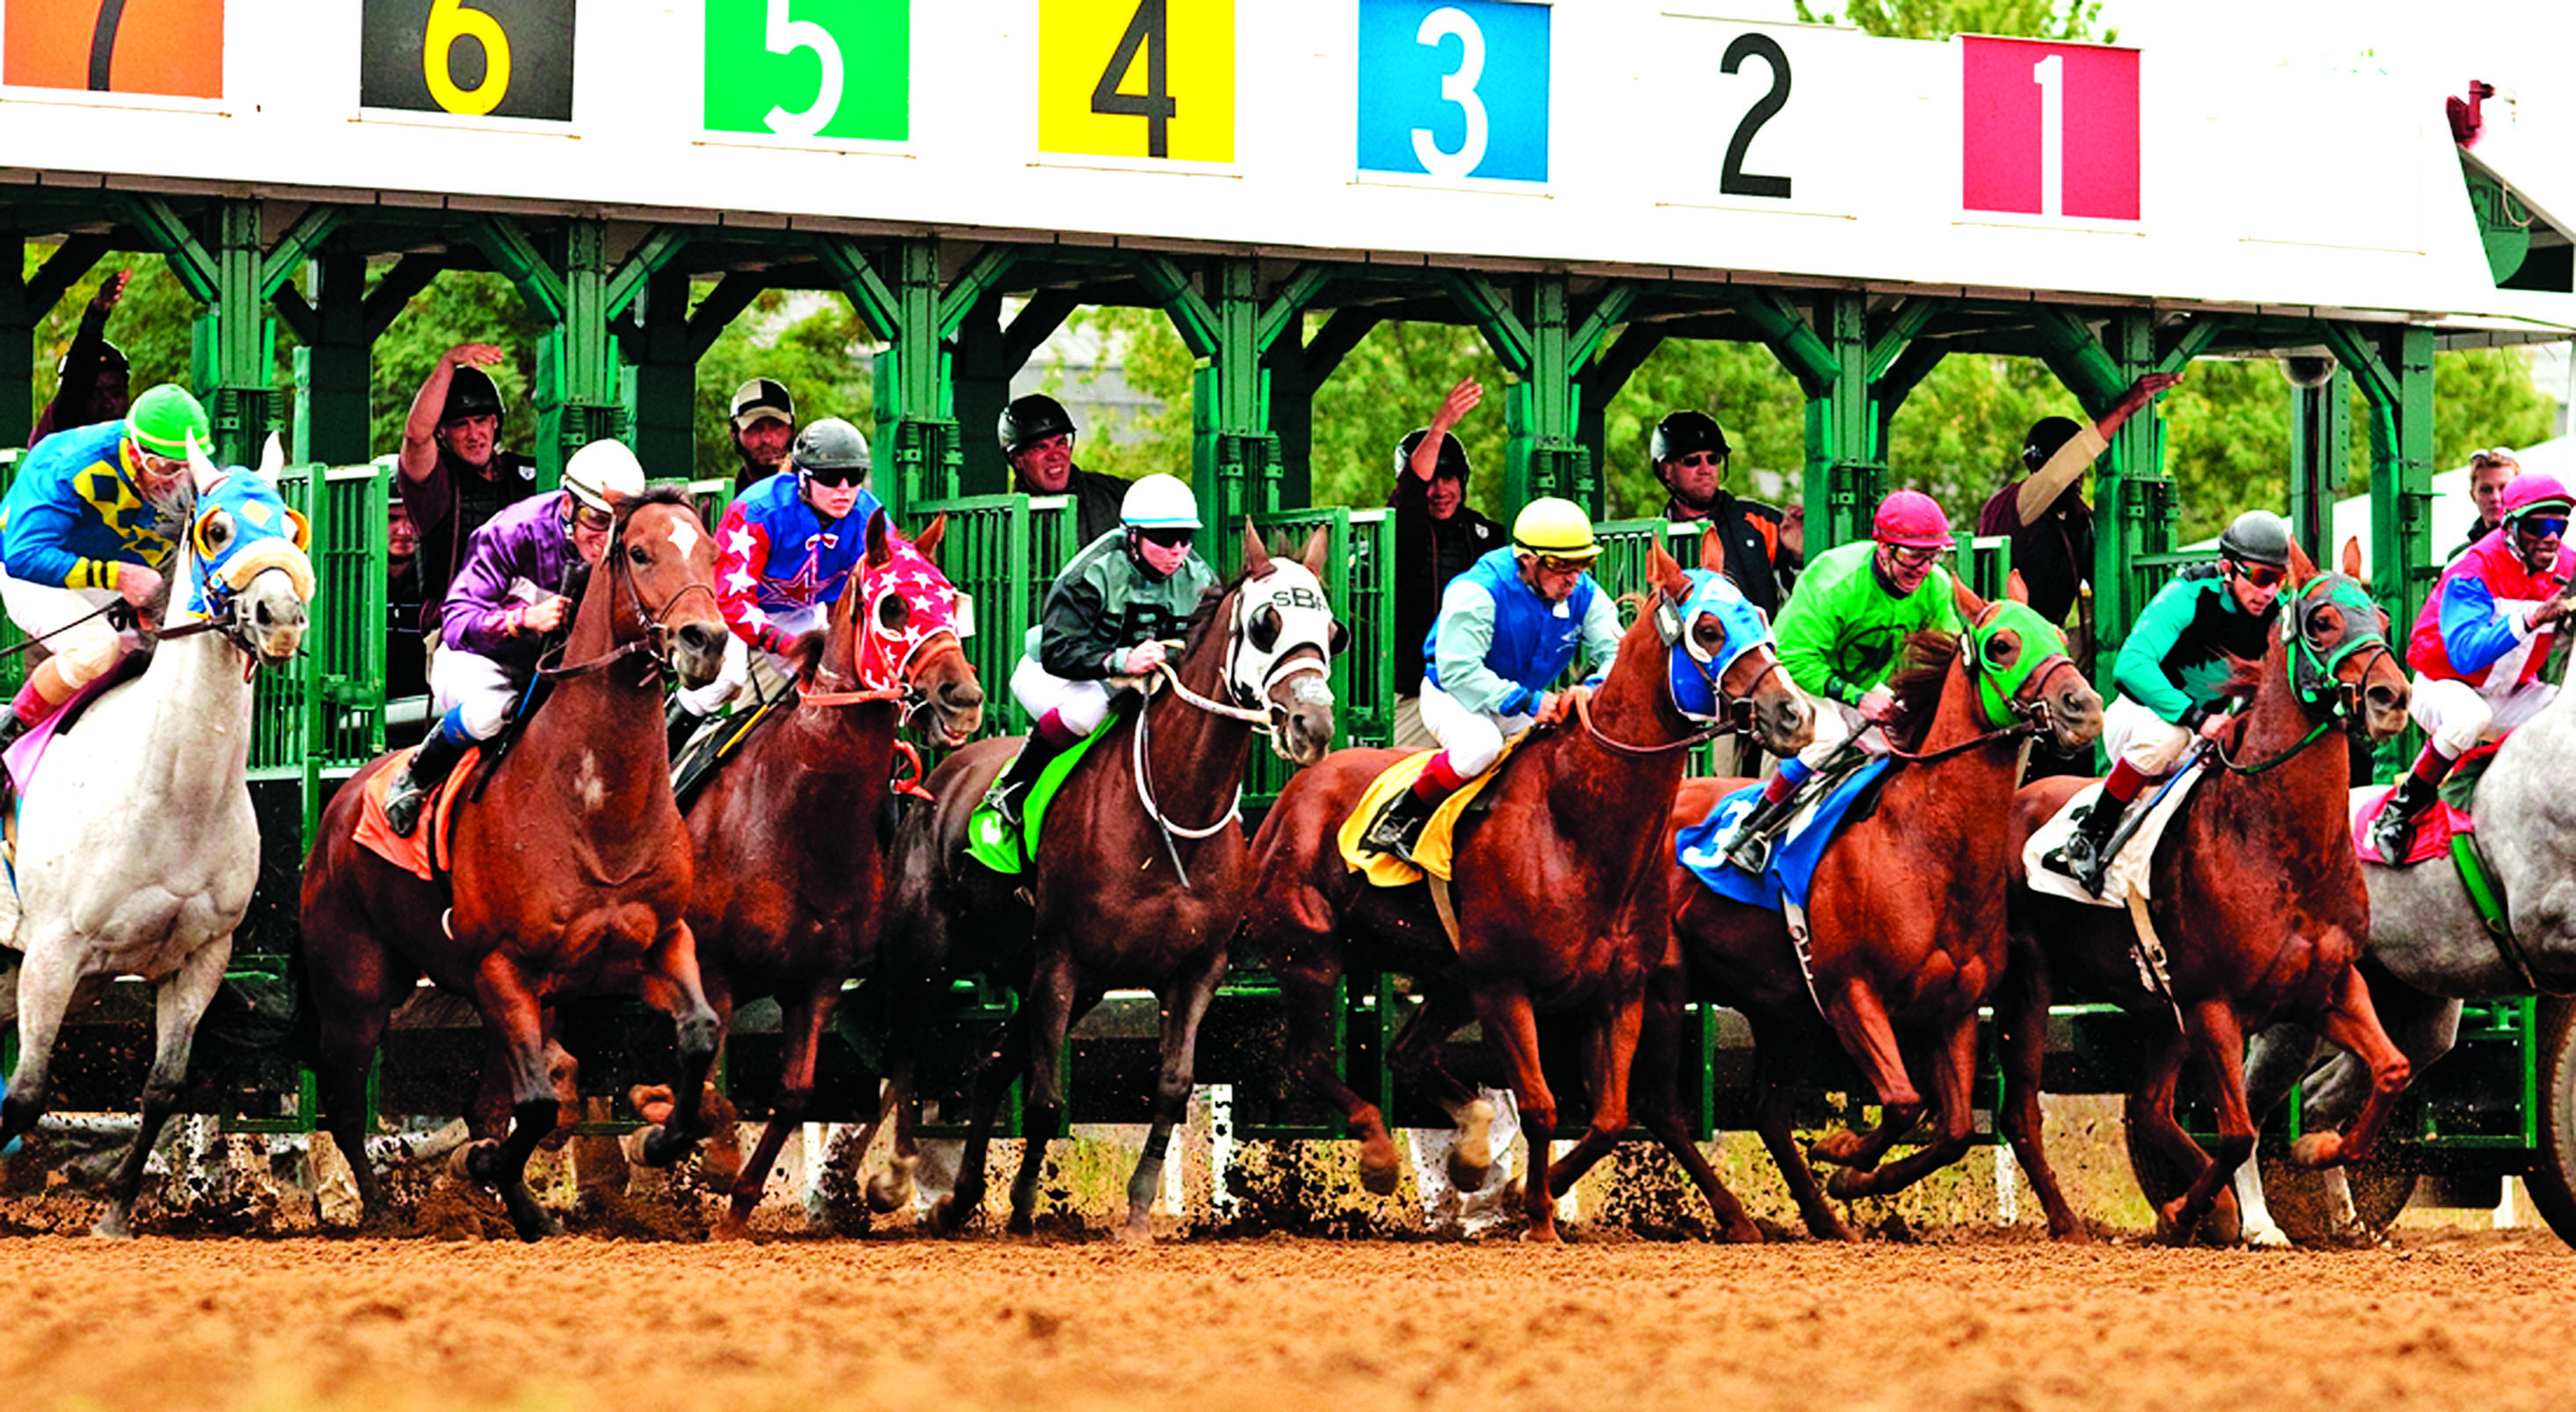 Ajax Downs horse racing